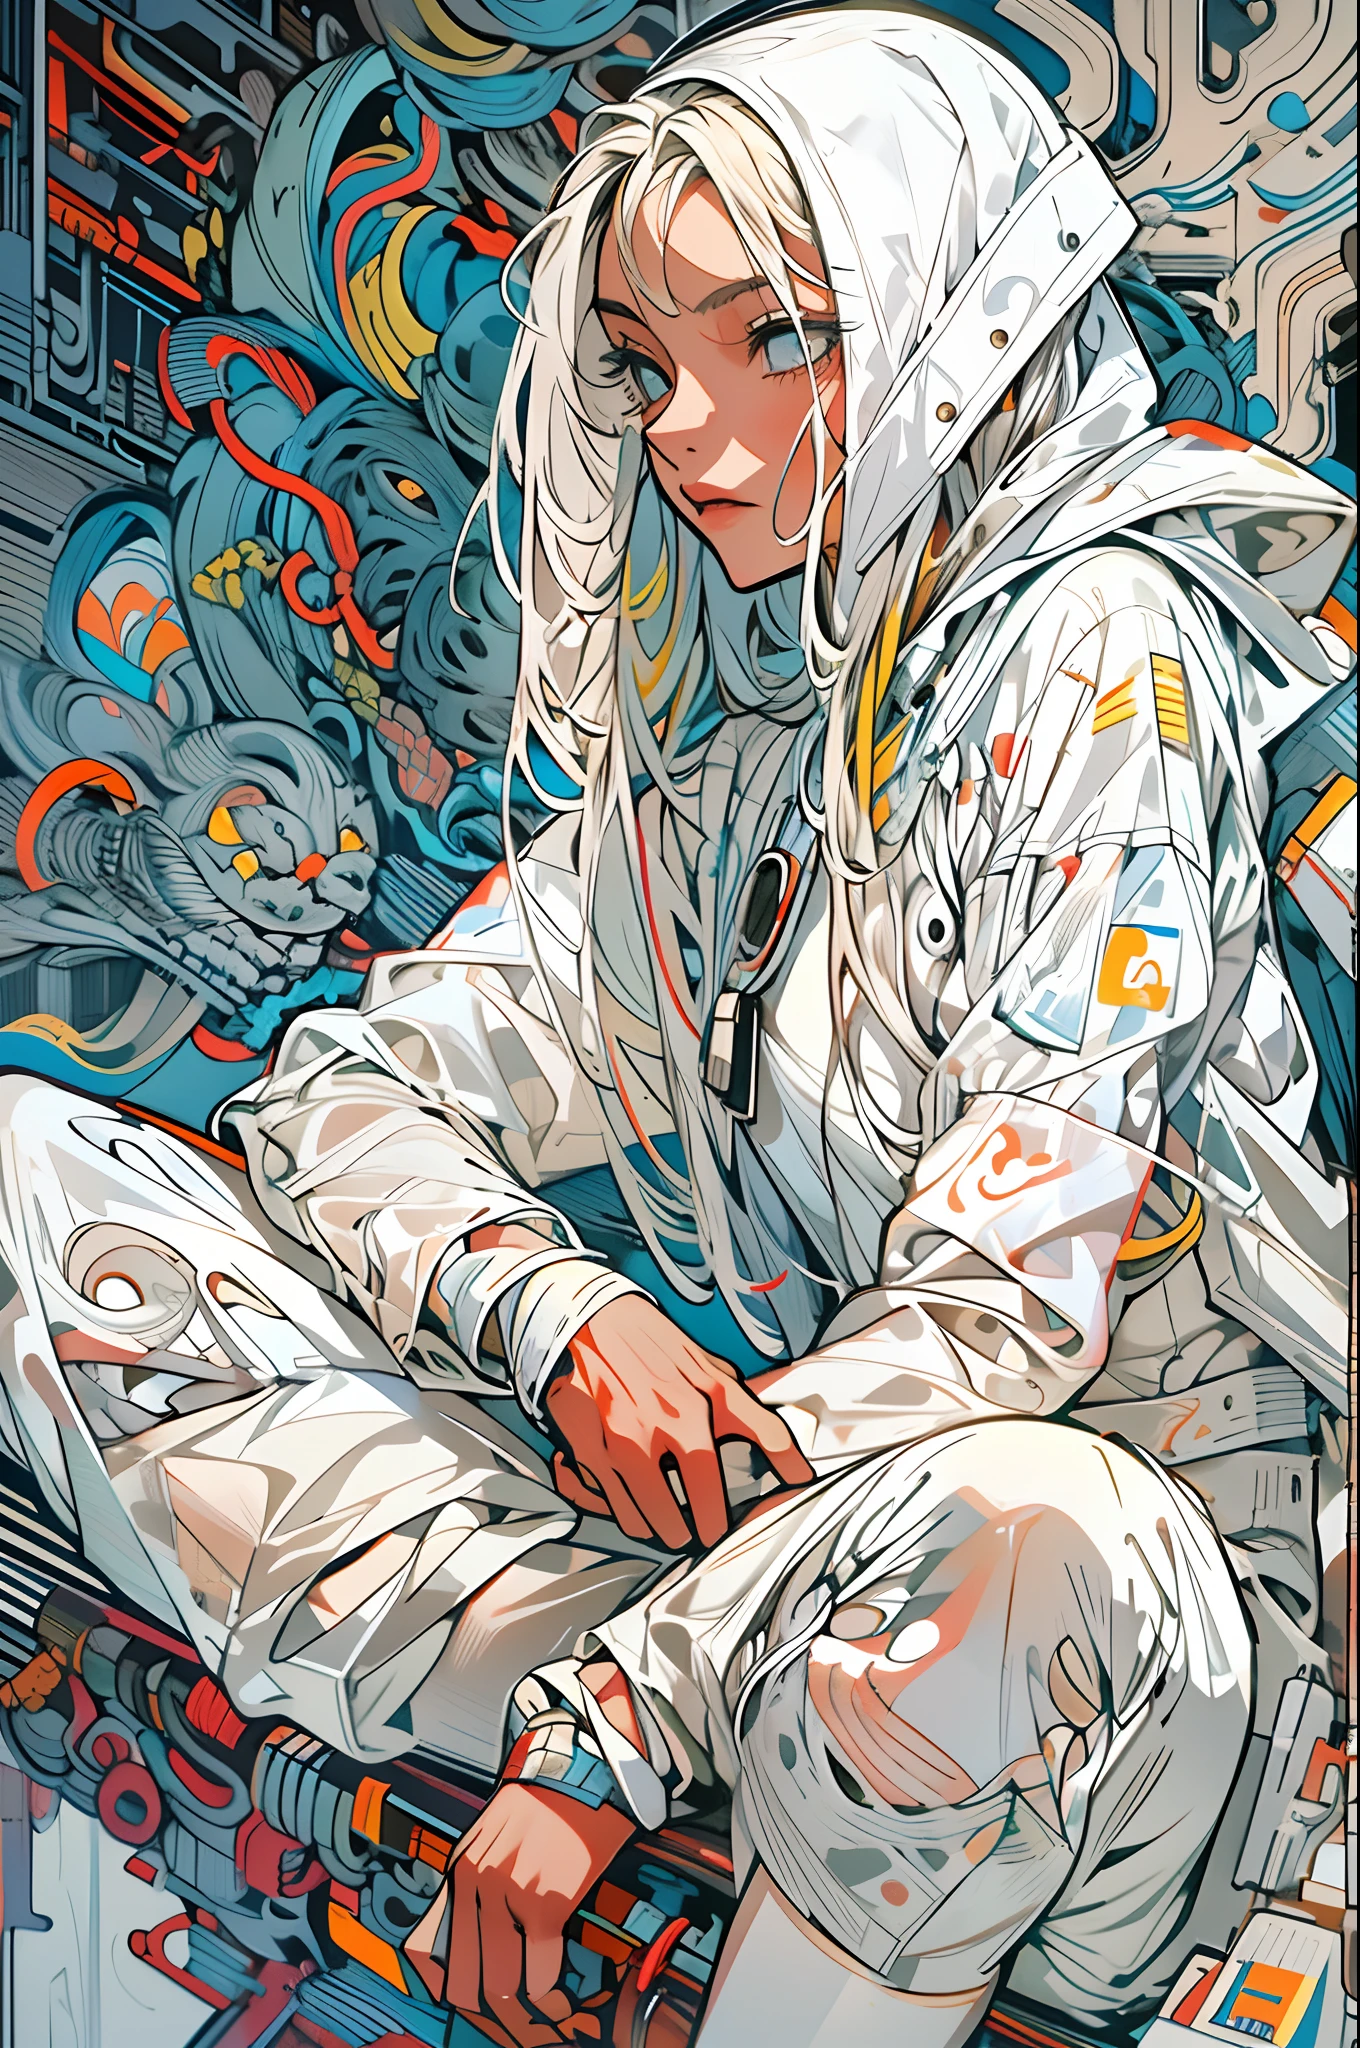 1monk 身着白色 Techwear 服装的女战士, 白色长发, 鞋带, 抽象复古科幻背景, Moebius 的艺术作品, 阿什利·伍德（Ashley Wood）的艺术作品